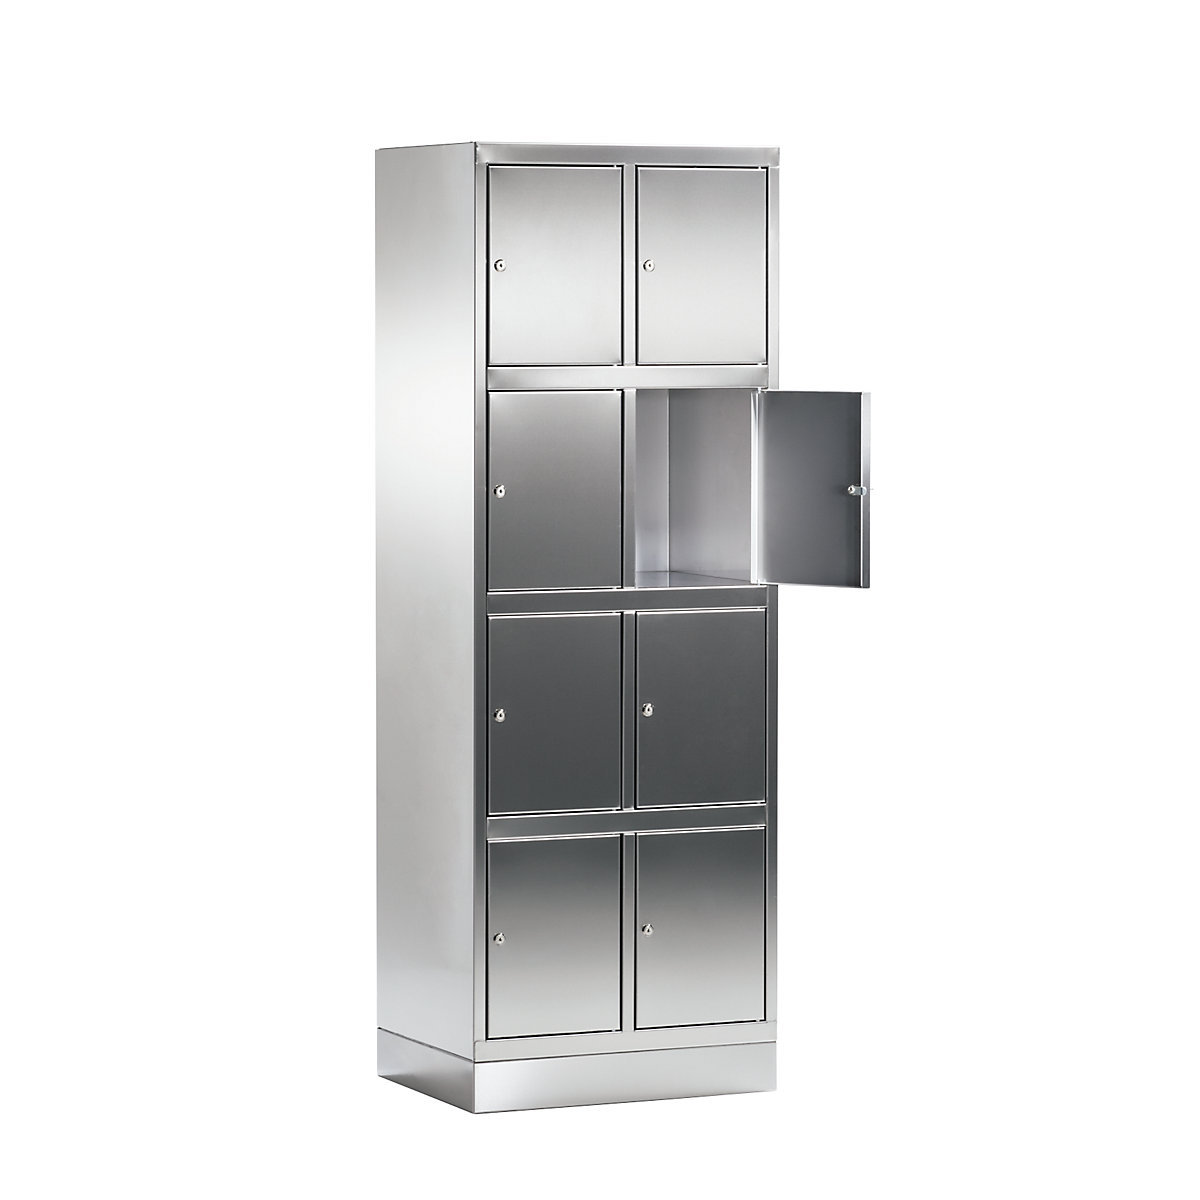 Stainless steel cupboard